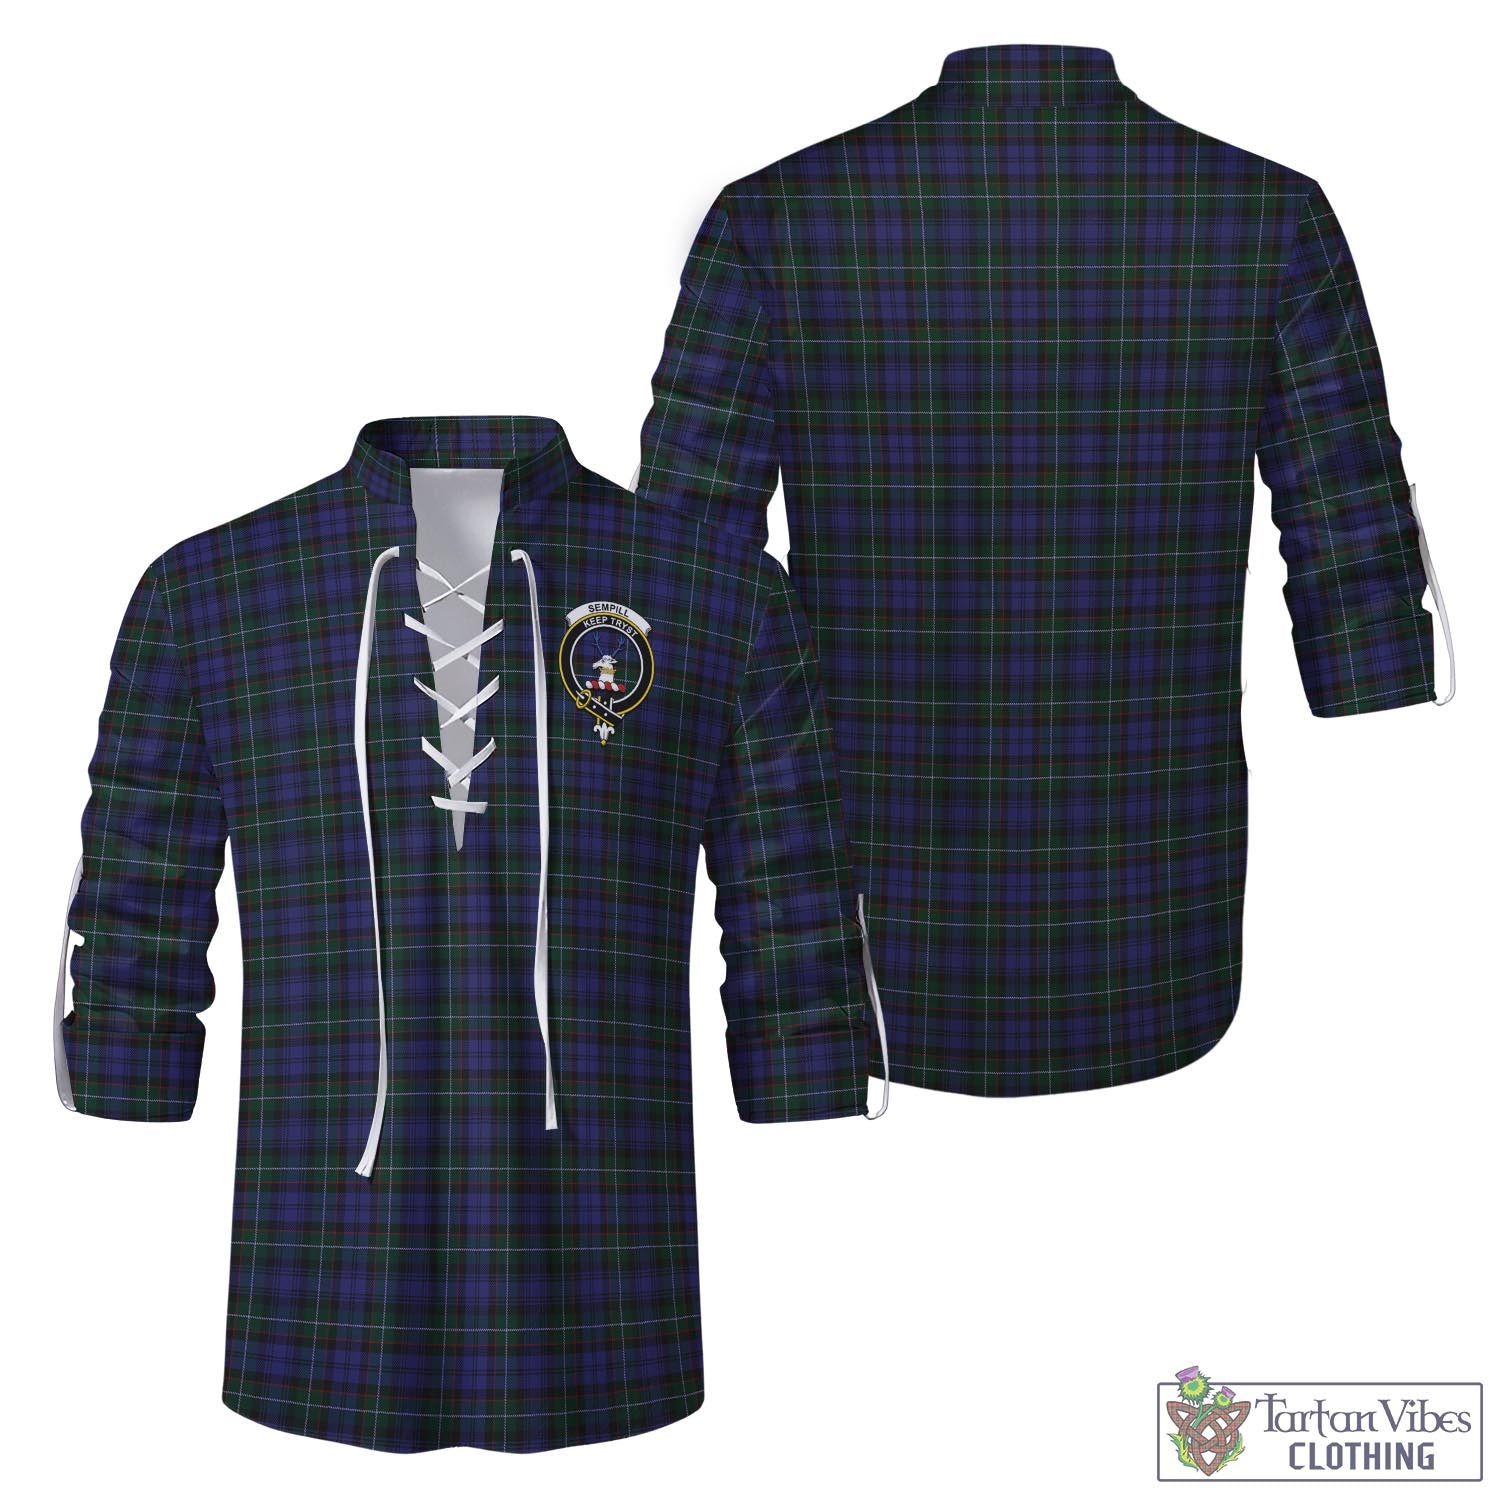 Tartan Vibes Clothing Sempill Tartan Men's Scottish Traditional Jacobite Ghillie Kilt Shirt with Family Crest